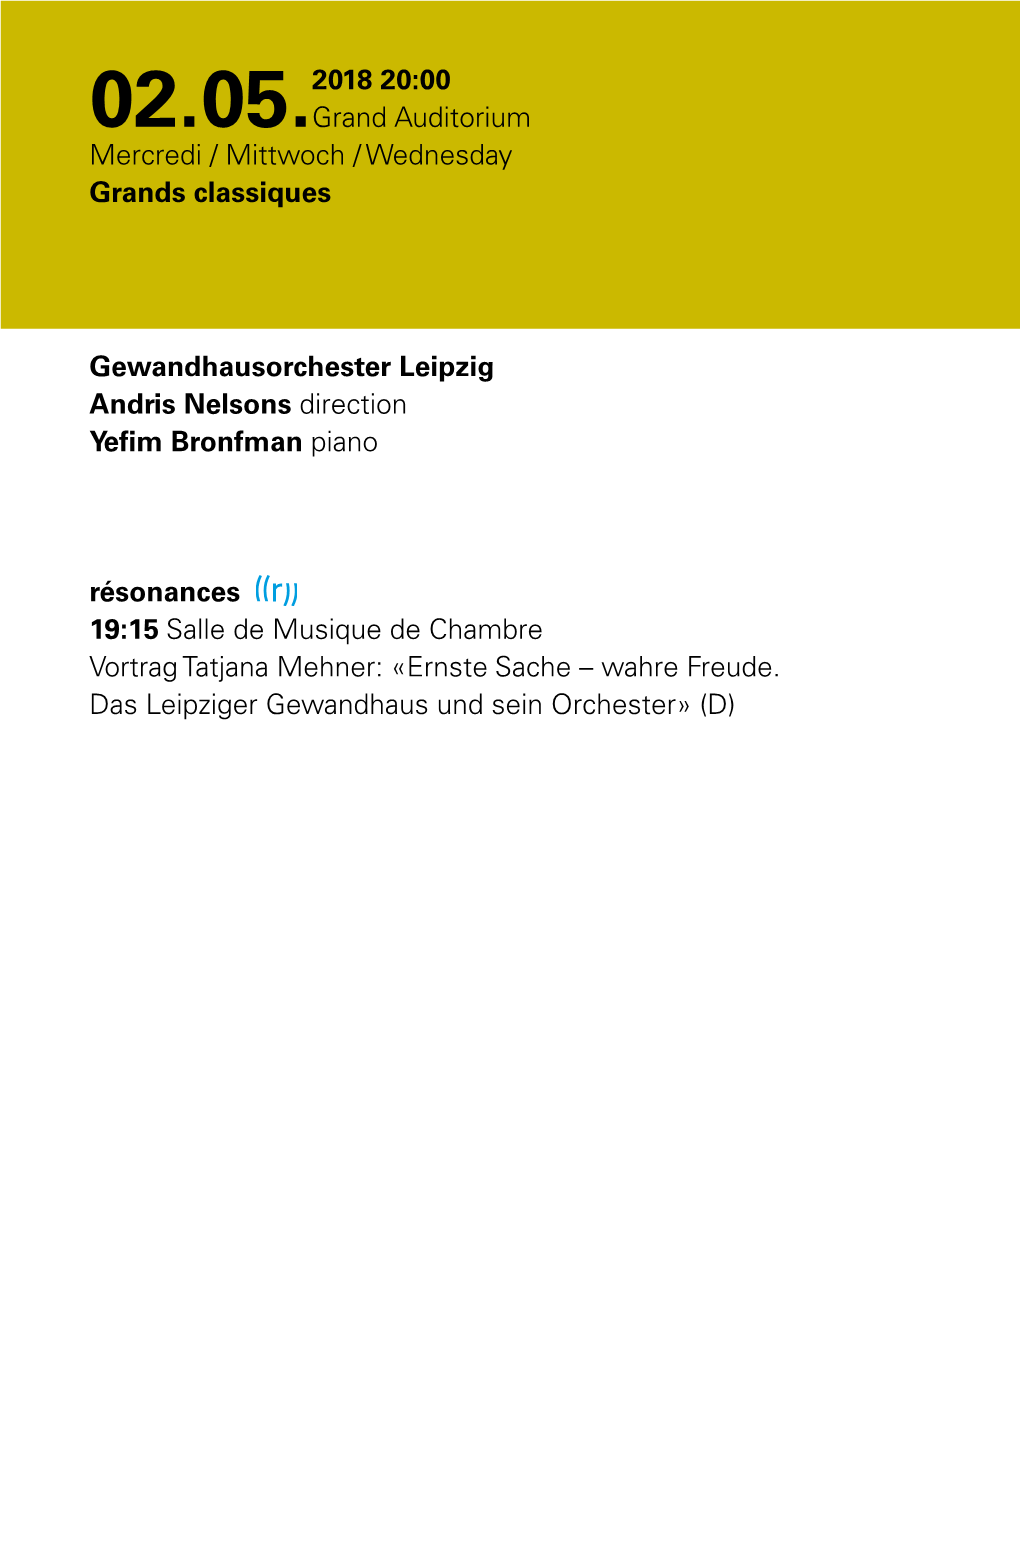 Gewandhausorchester Leipzig Andris Nelsons Direction Yefim Bronfman Piano